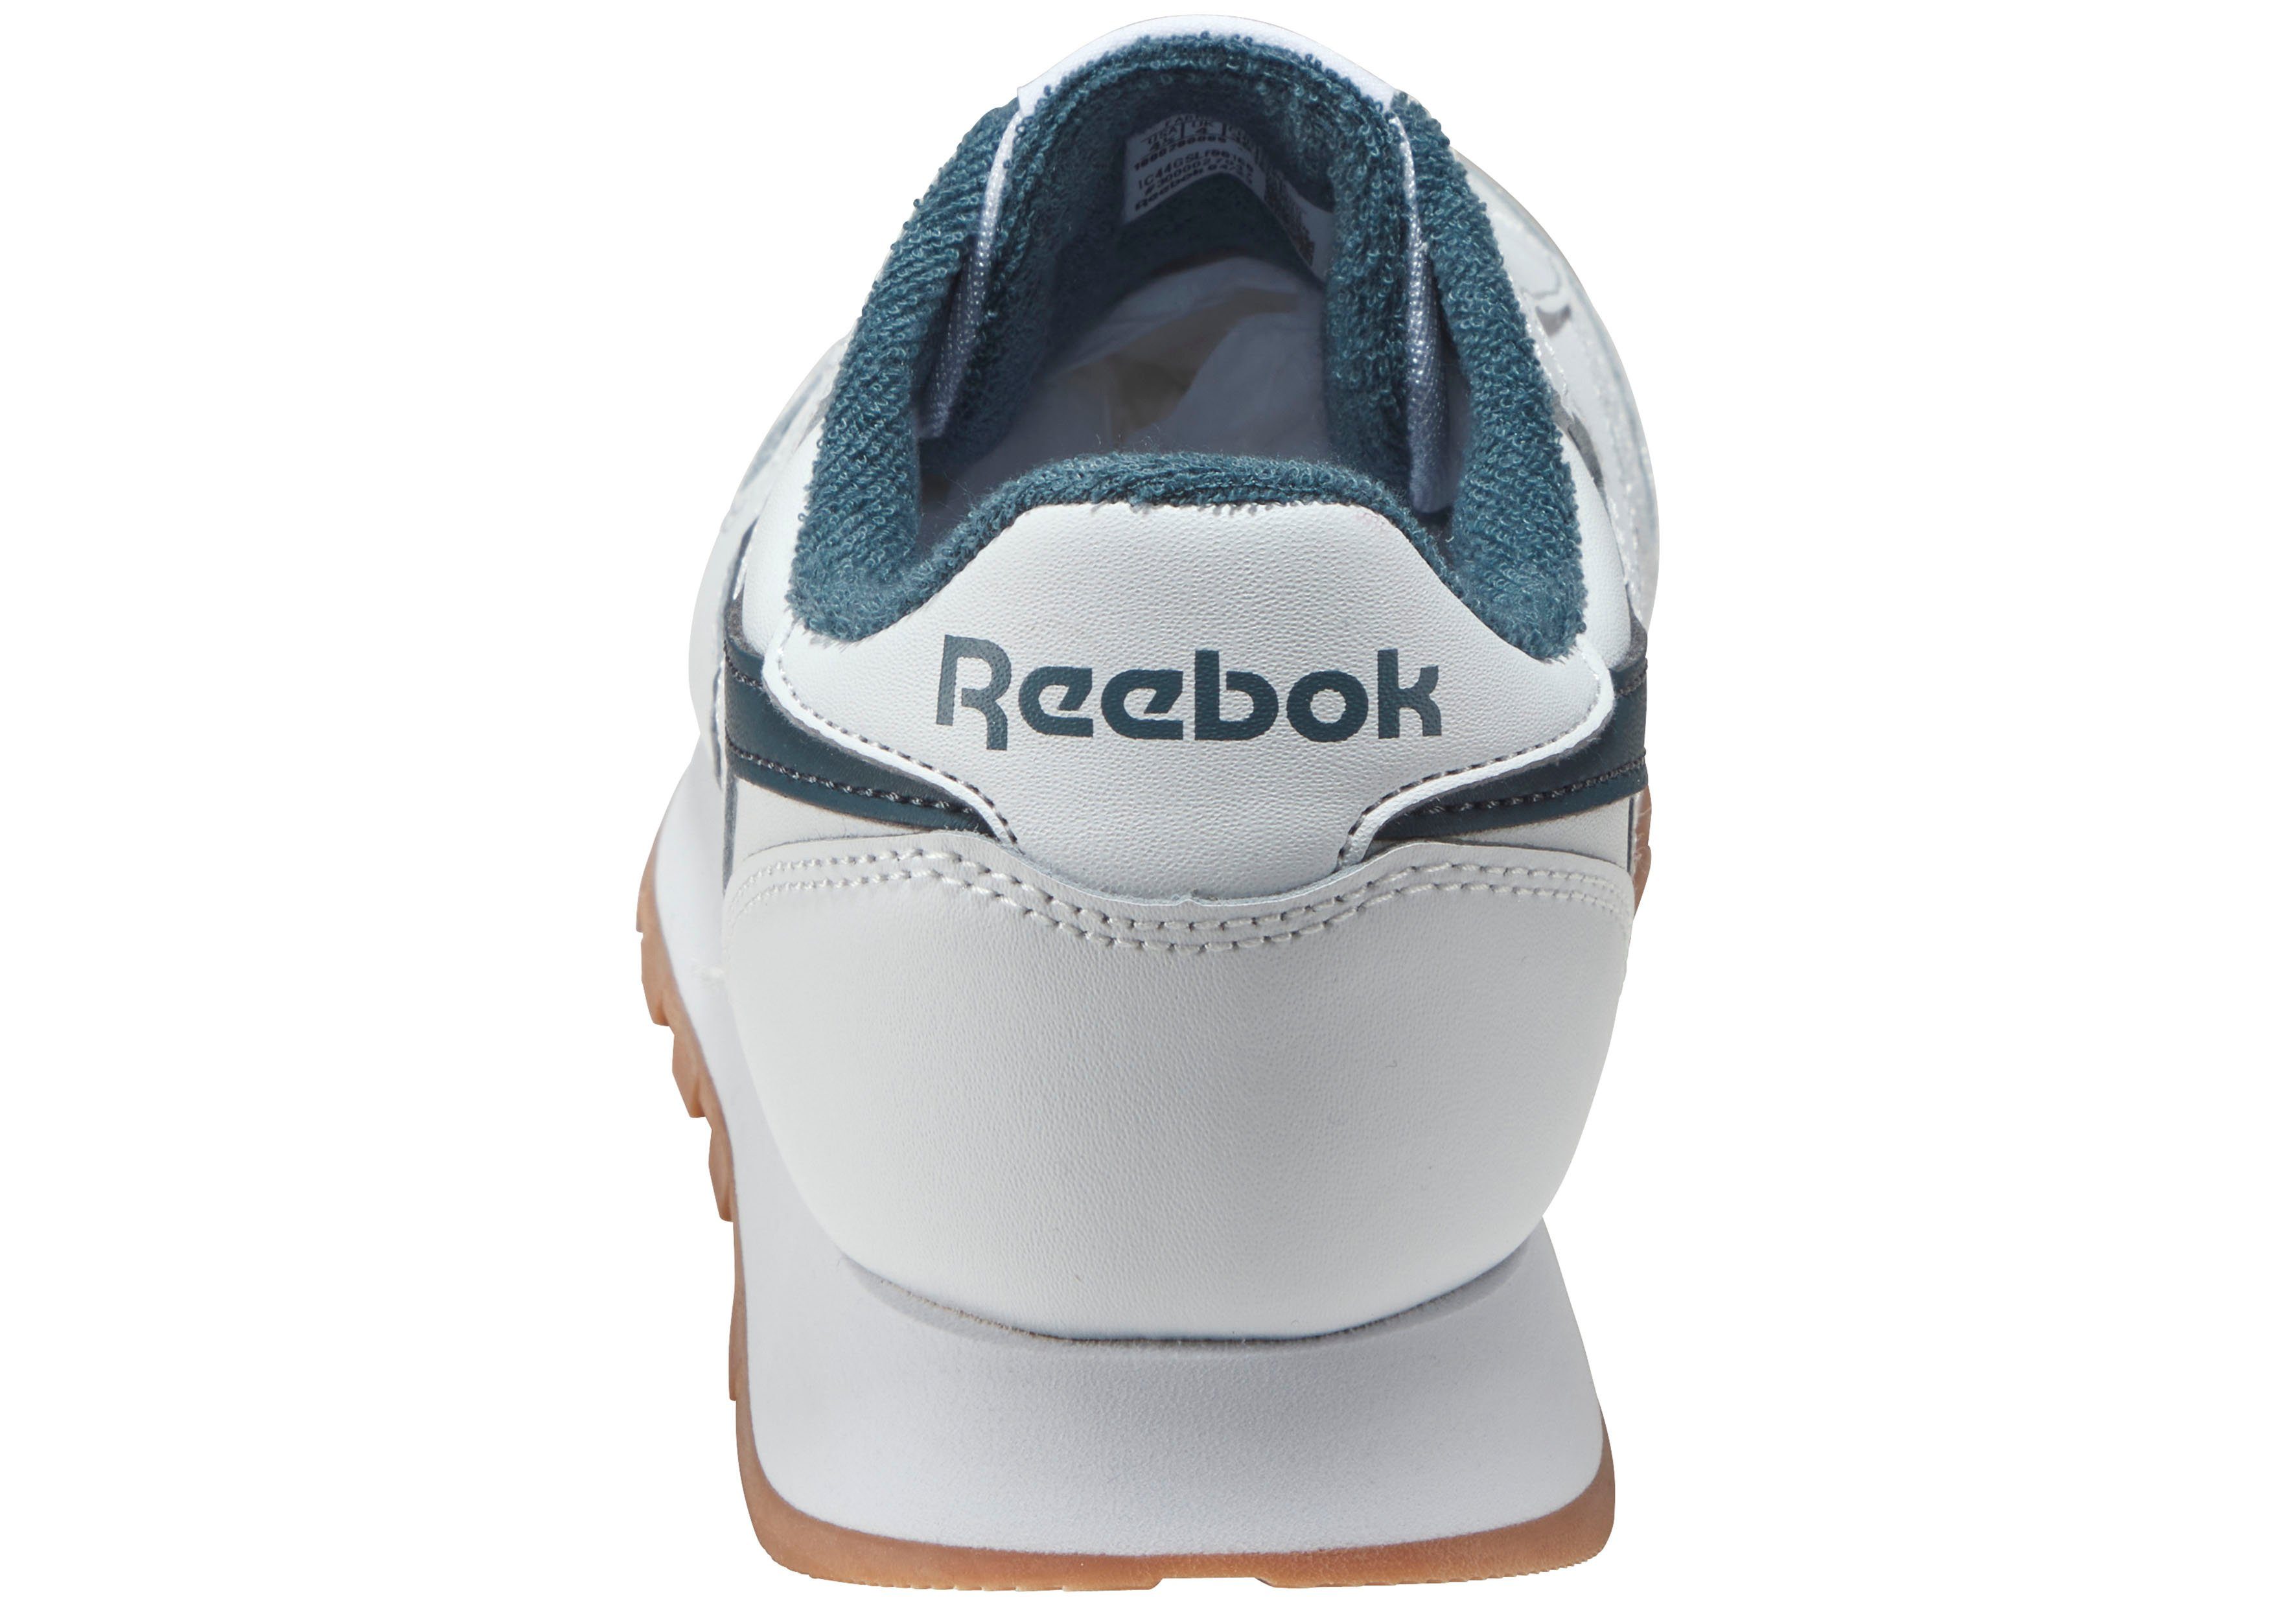 Sneaker Reebok weiß-blau LEATHER CLASSIC Classic